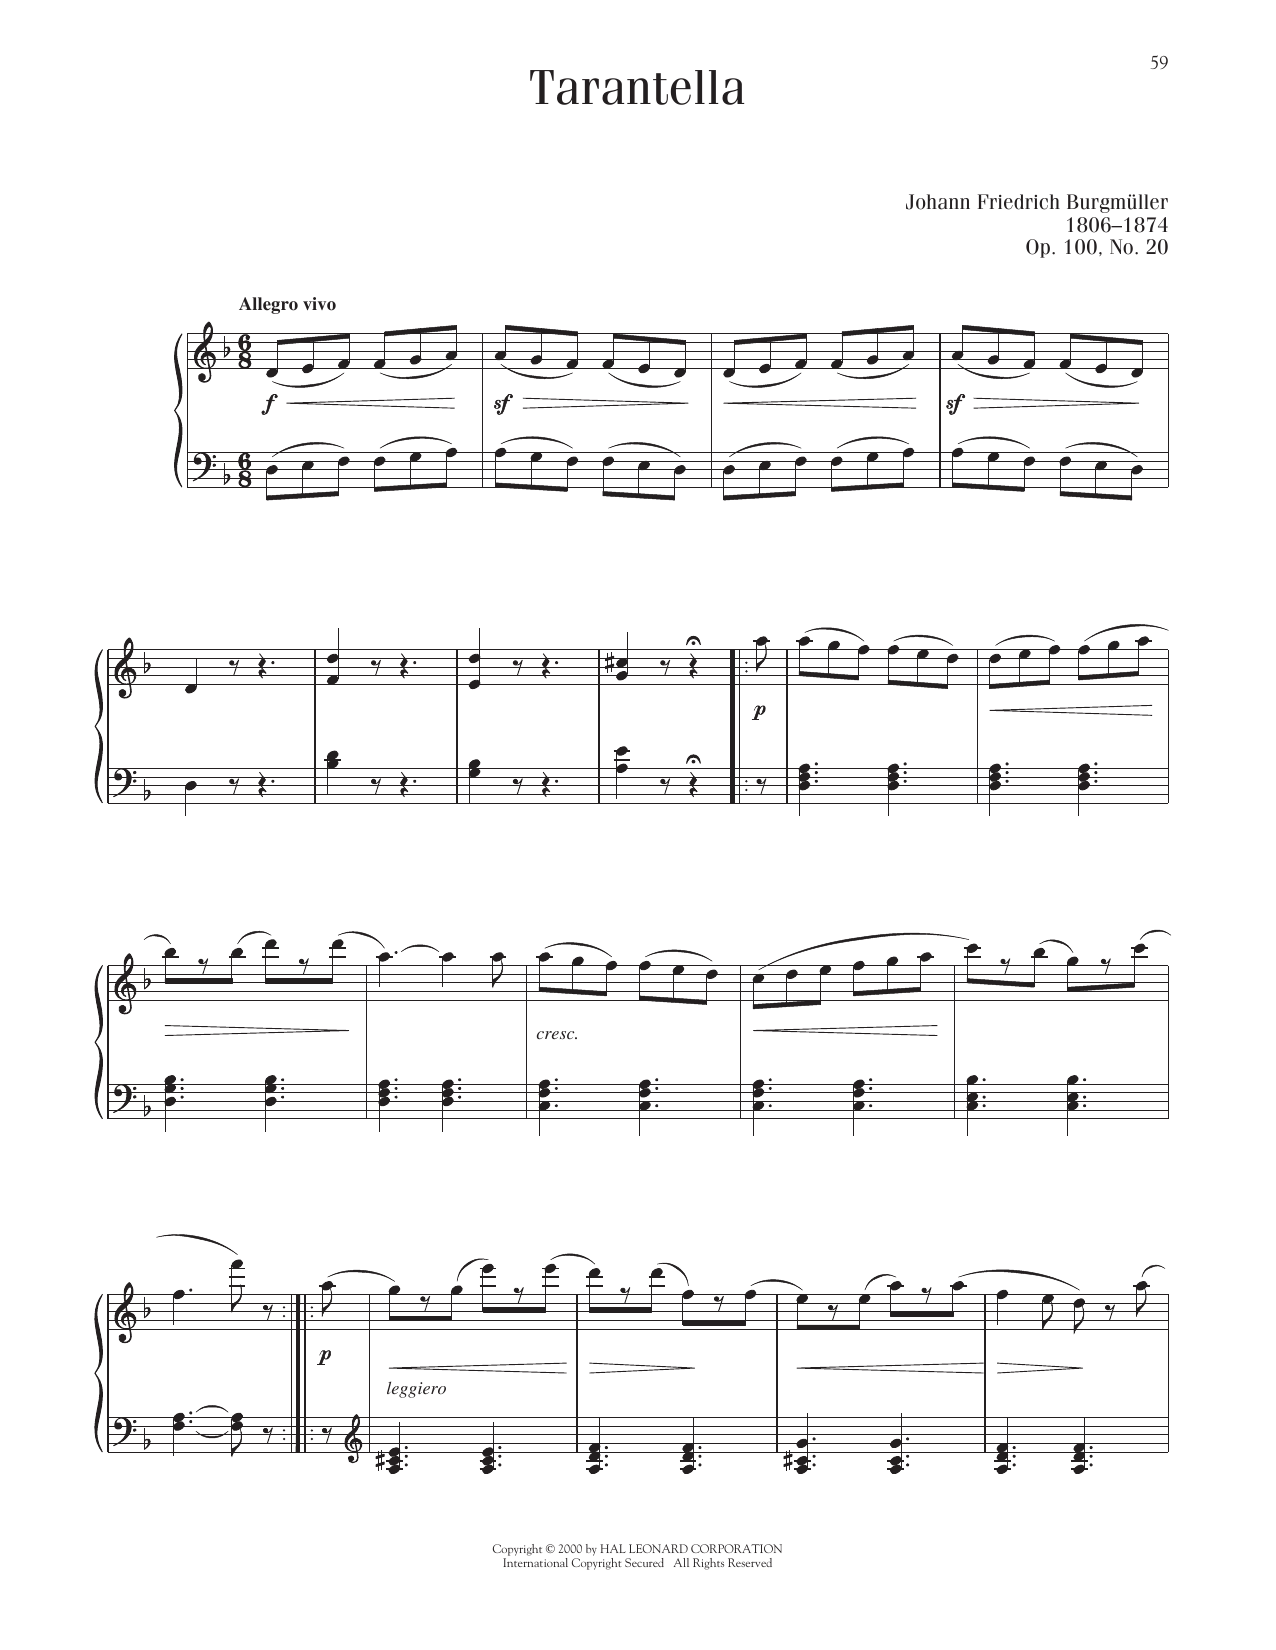 Johann Friedrich Burgmuller Tarantella, Op. 100, No. 20 Sheet Music Notes & Chords for Piano Solo - Download or Print PDF